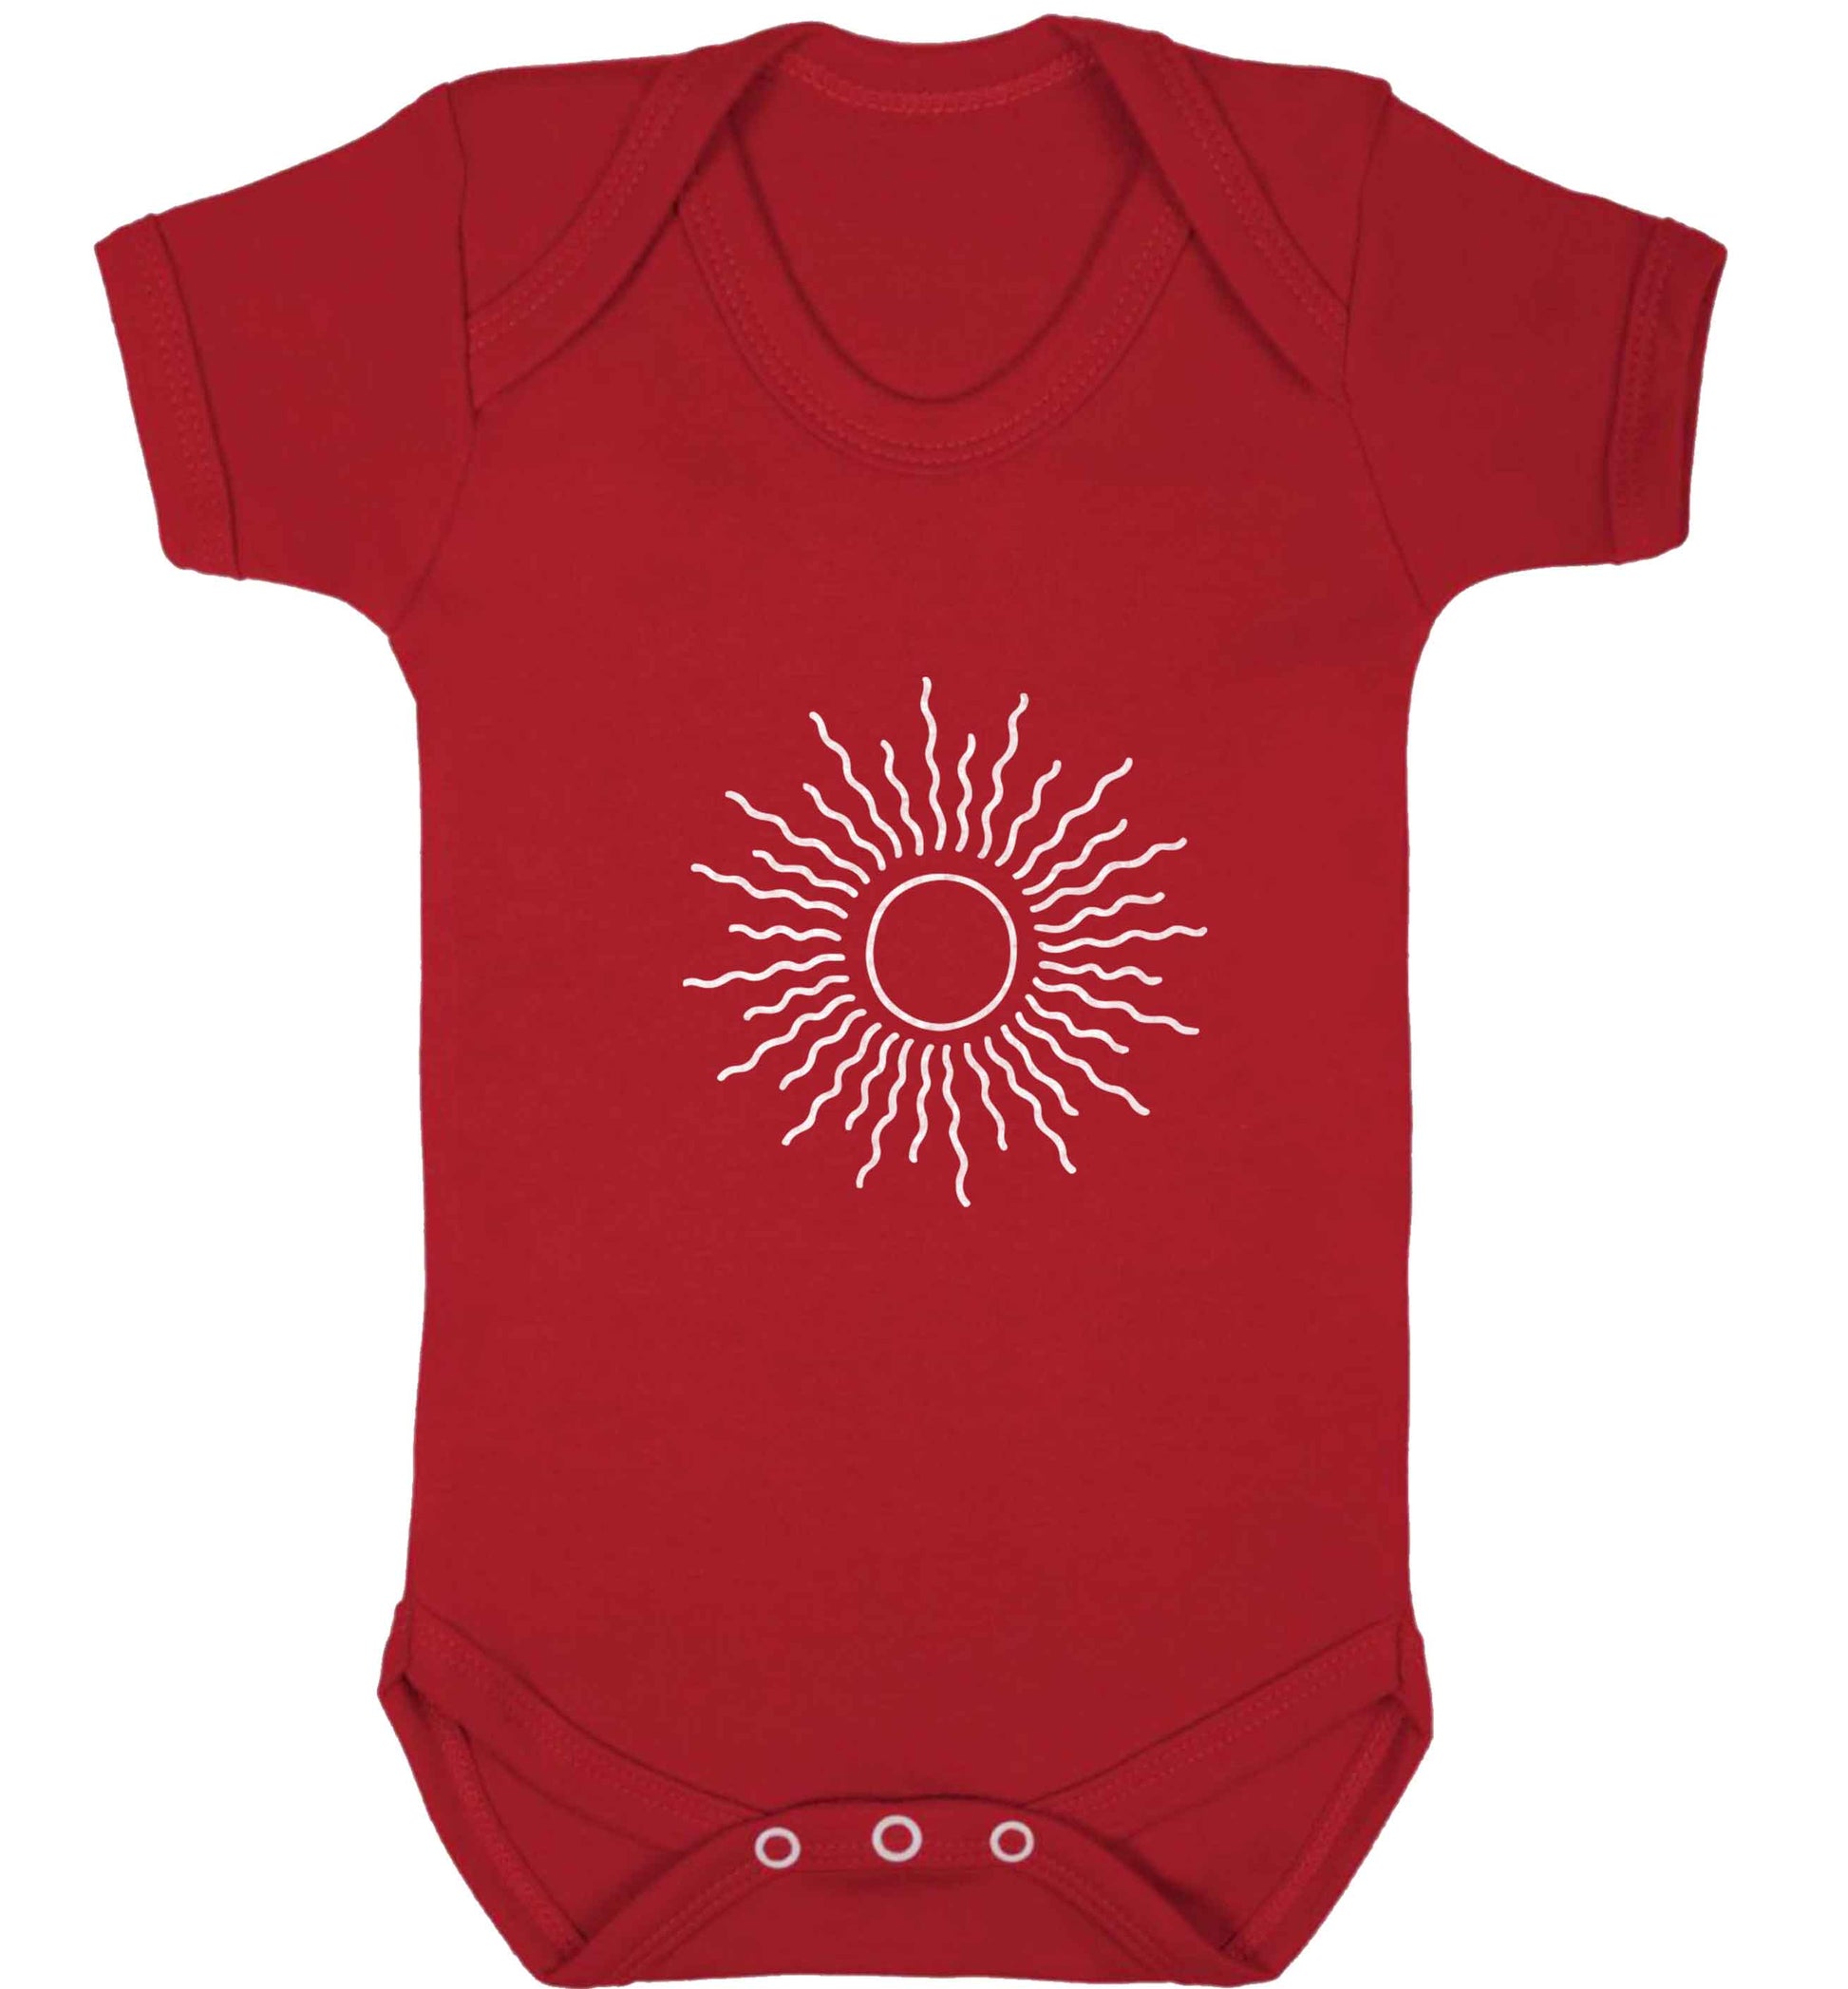 Sun illustration baby vest red 18-24 months